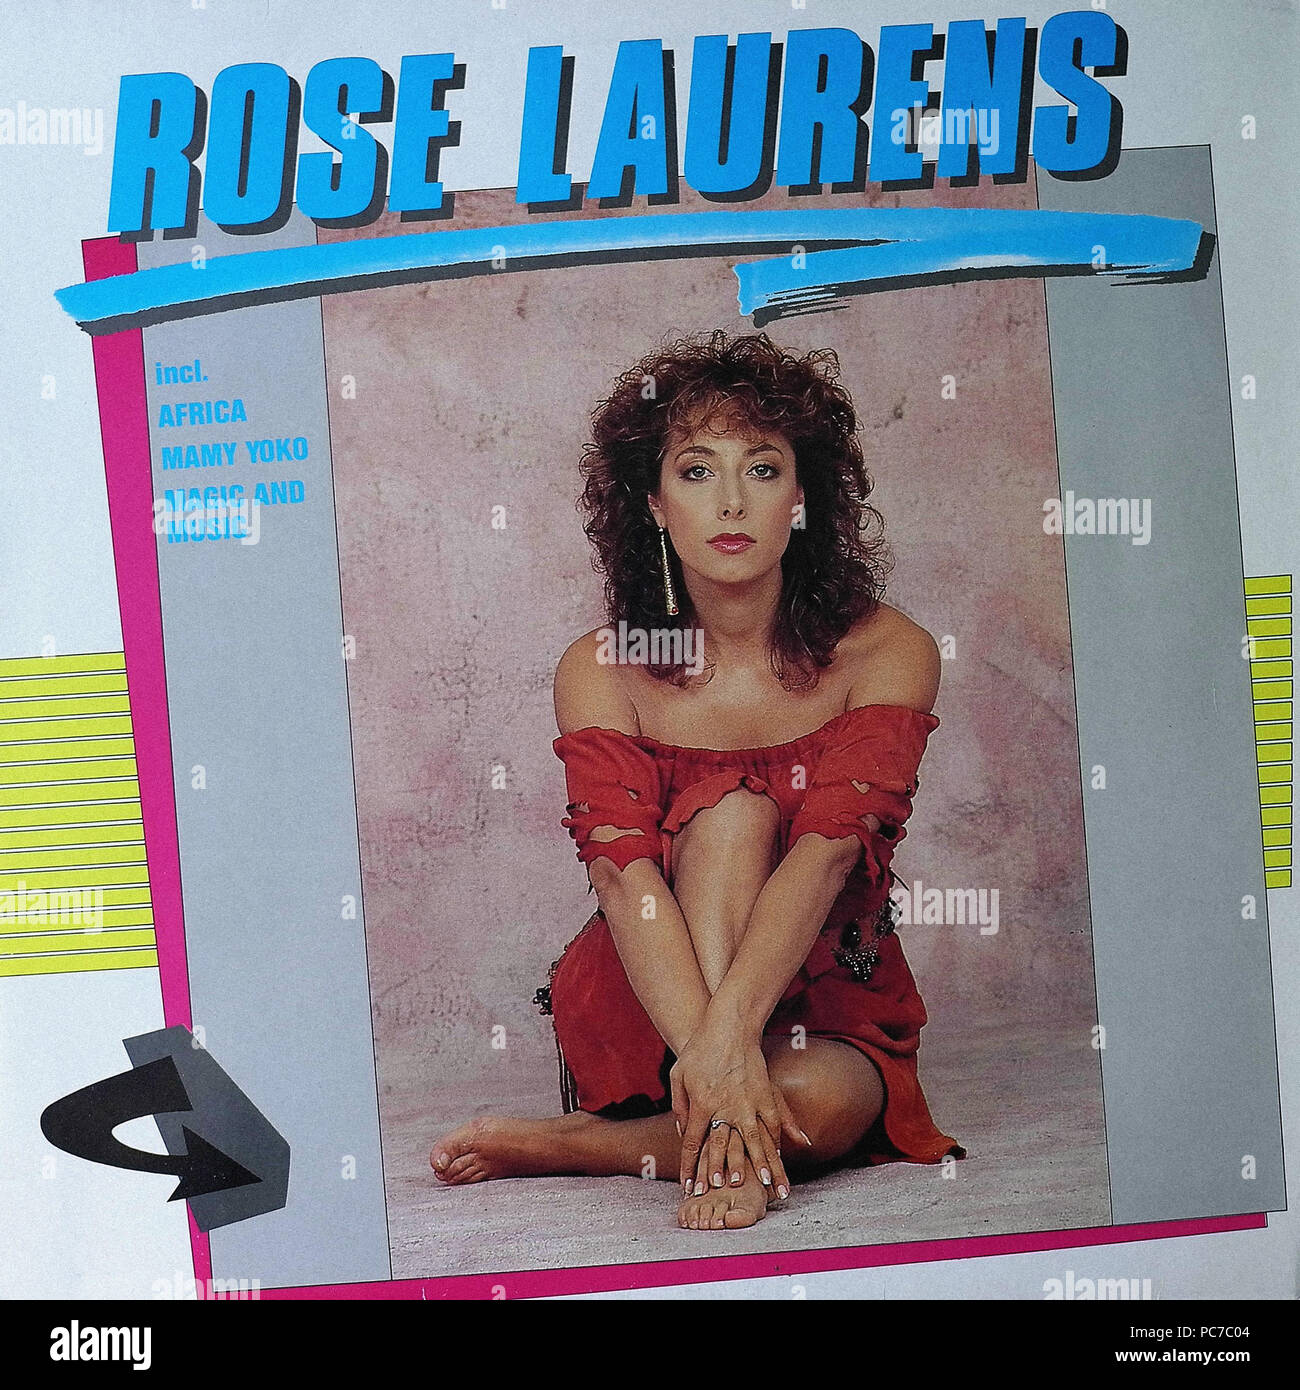 Rose Laurens - Rose Laurens - Vintage Vinyl Album Cover Stockfotografie -  Alamy